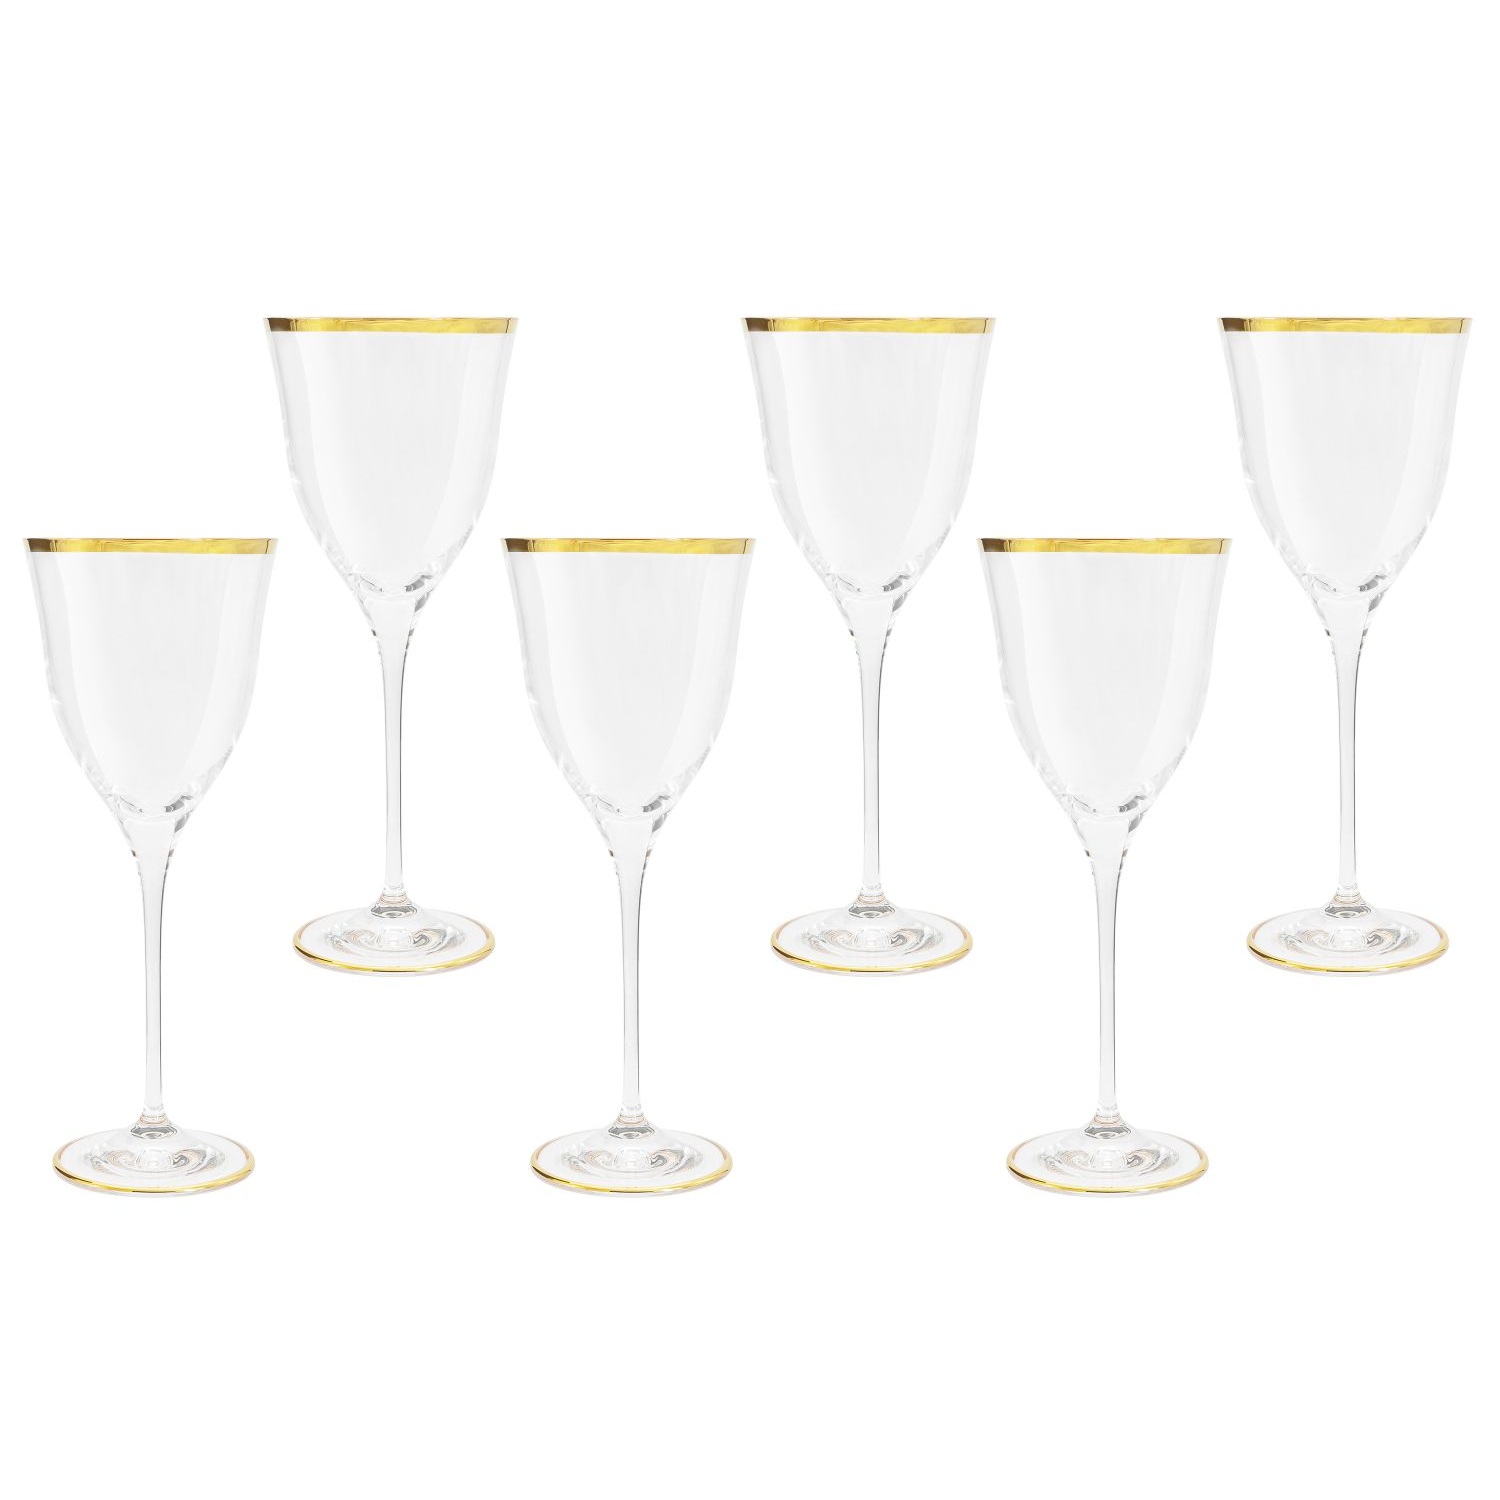 Набор бокалов для вина Same Сабина золото 6 шт набор бокалов для шампанского same сабина золото 6 шт